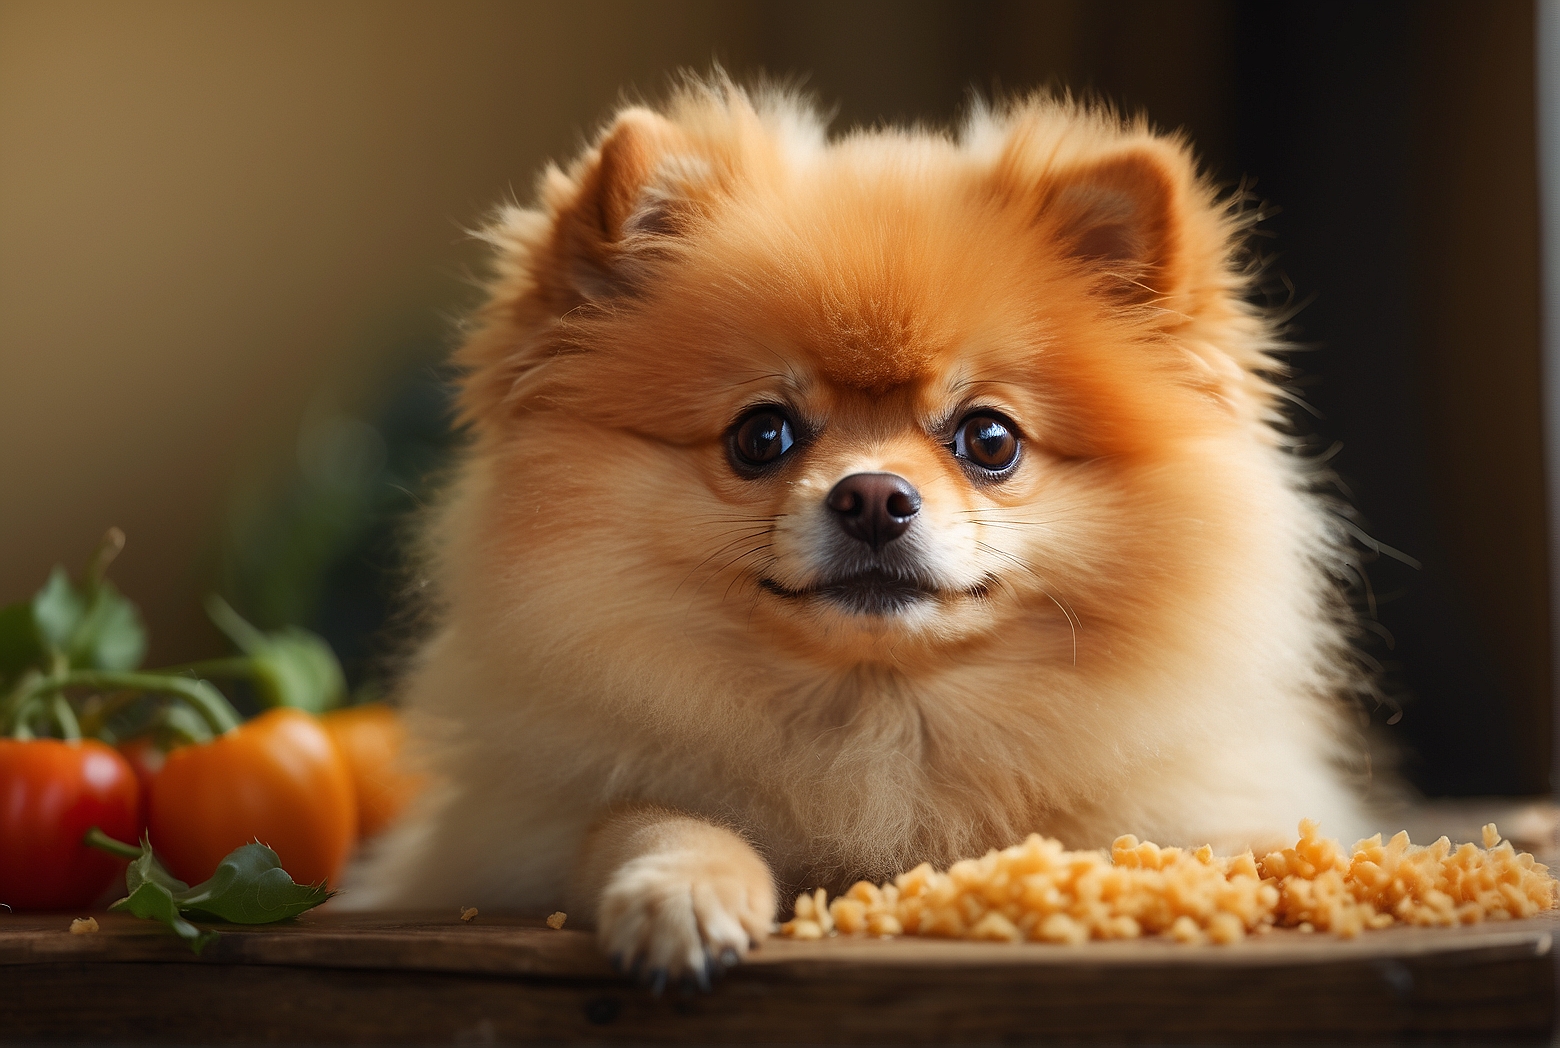 What should I feed my Pomeranian?